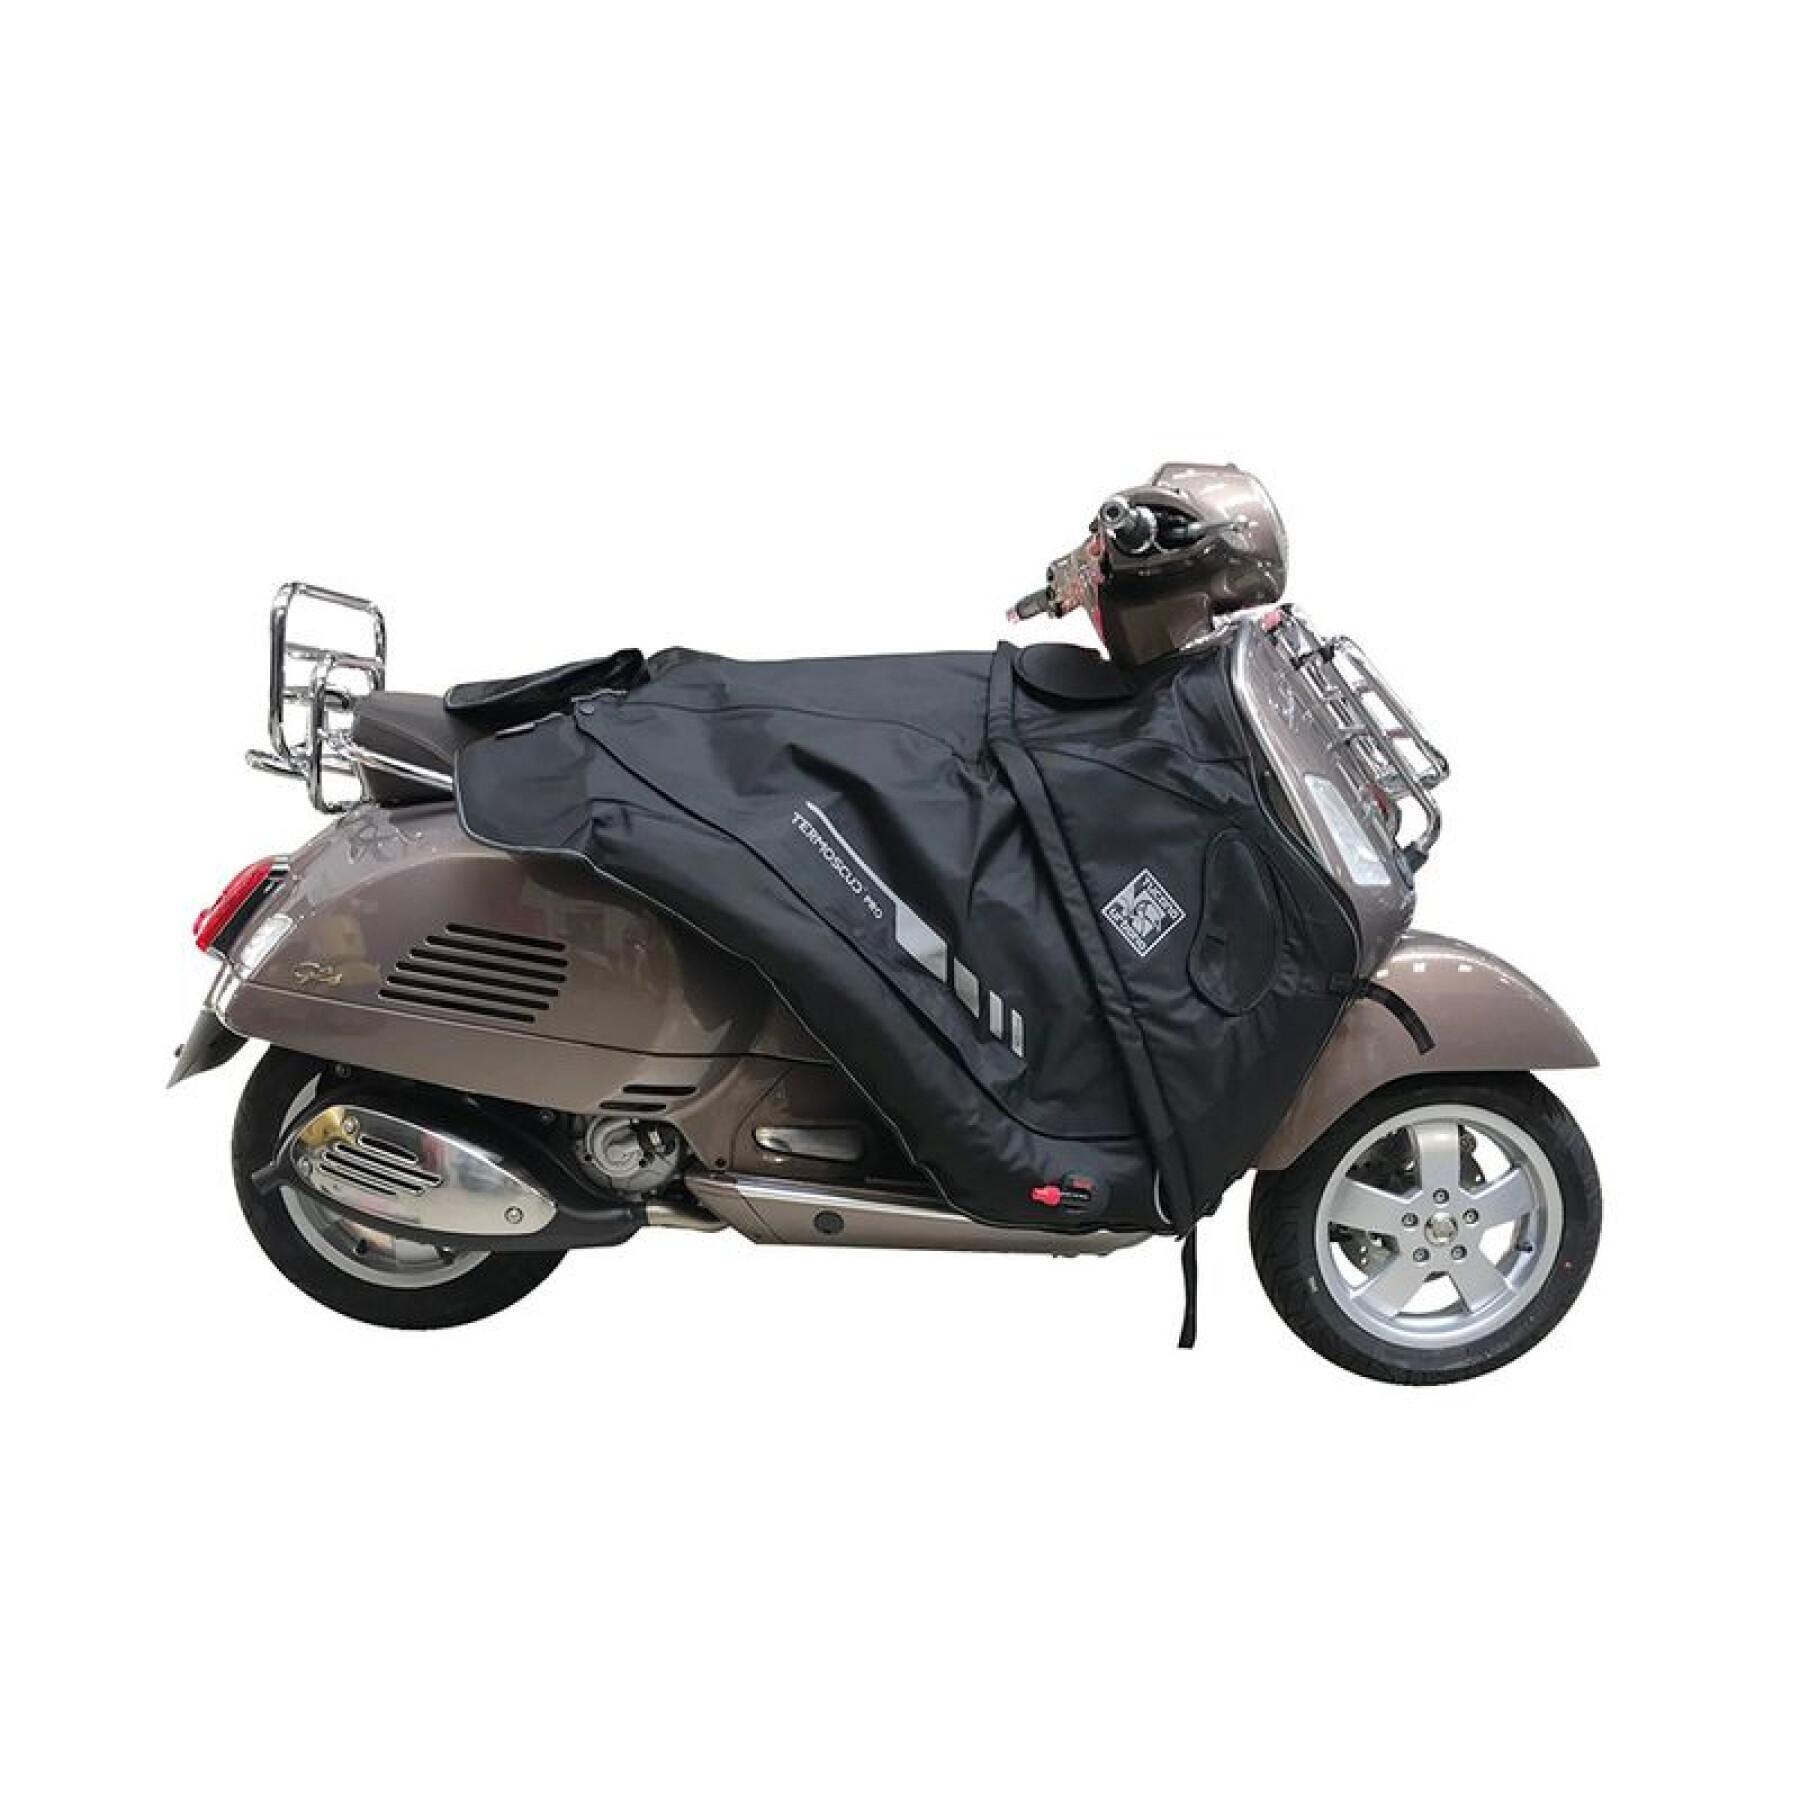 Tablier scooter Tucano Urbano Termoscud Pro Piaggio Vespa Super Sport/Gts  Super Sport 125/300 - Tabliers - Habillage - Moto & scooter